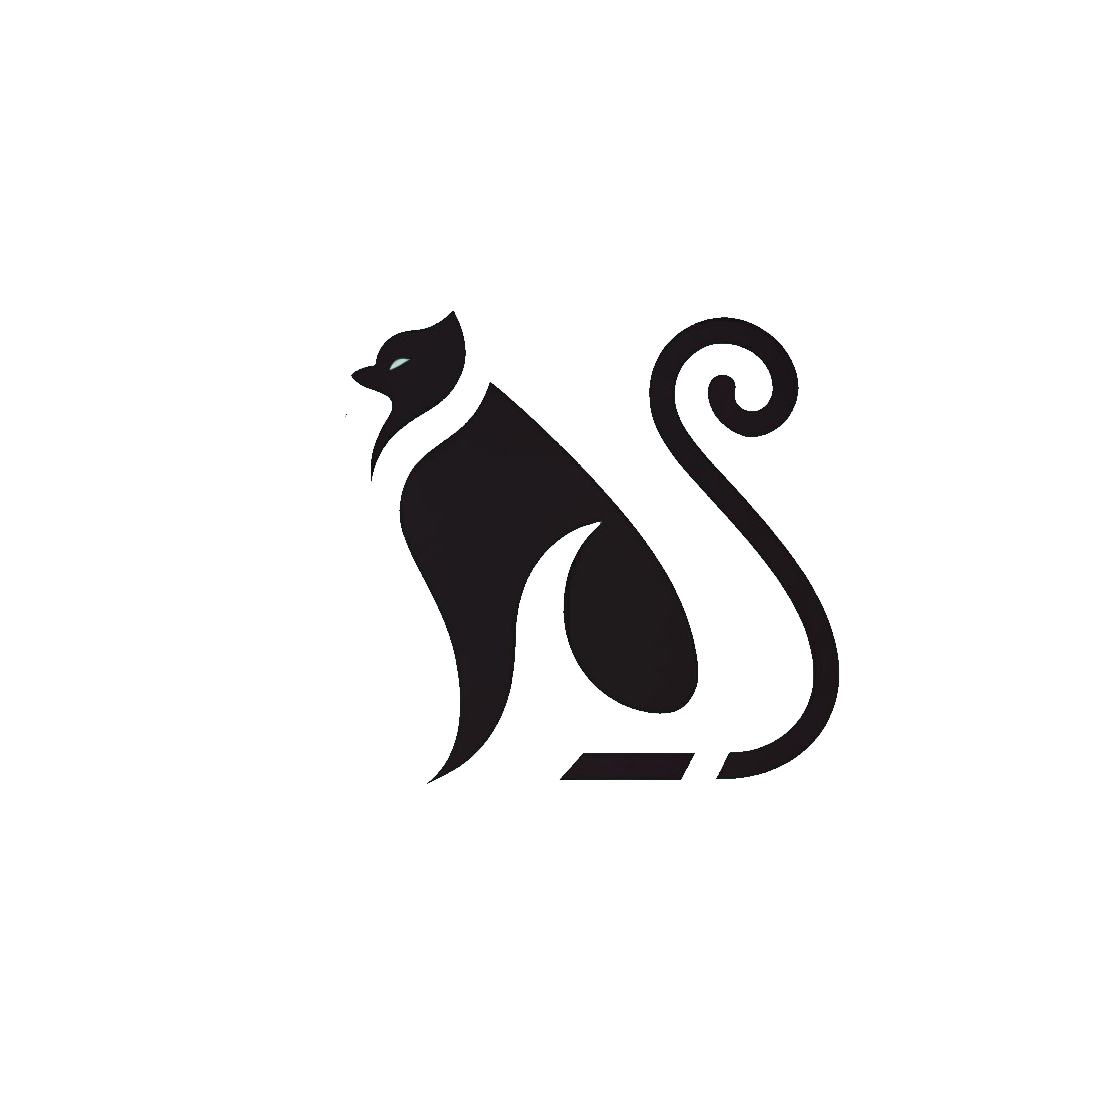 Dog - Logo Design Template cover image.